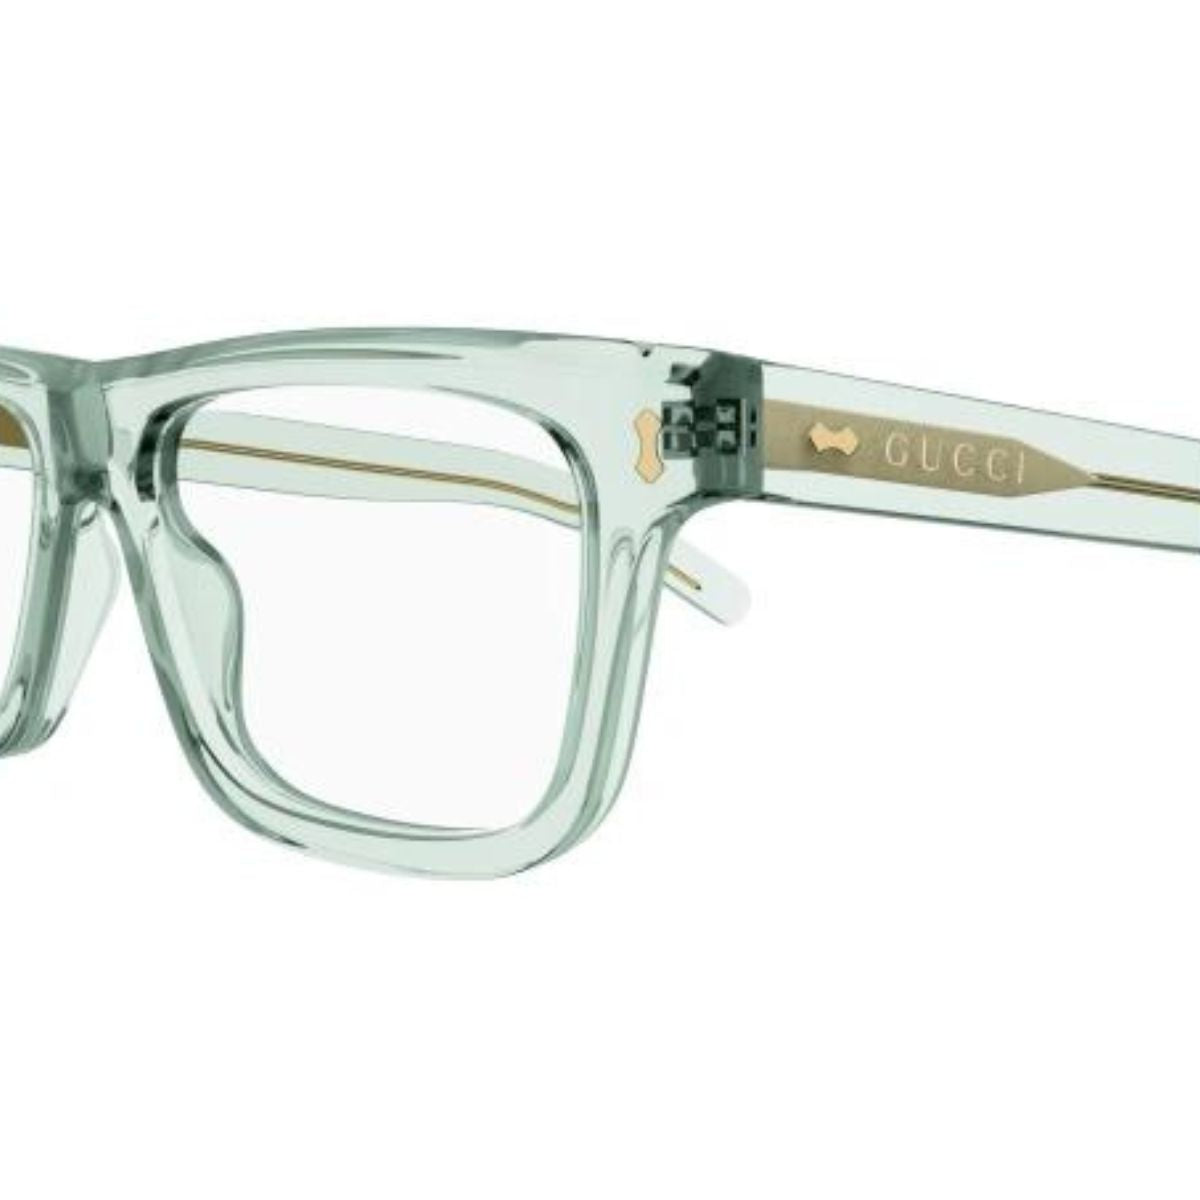 "shop Gucci 1525O 004 prescription glasses frame for men's at optorium"